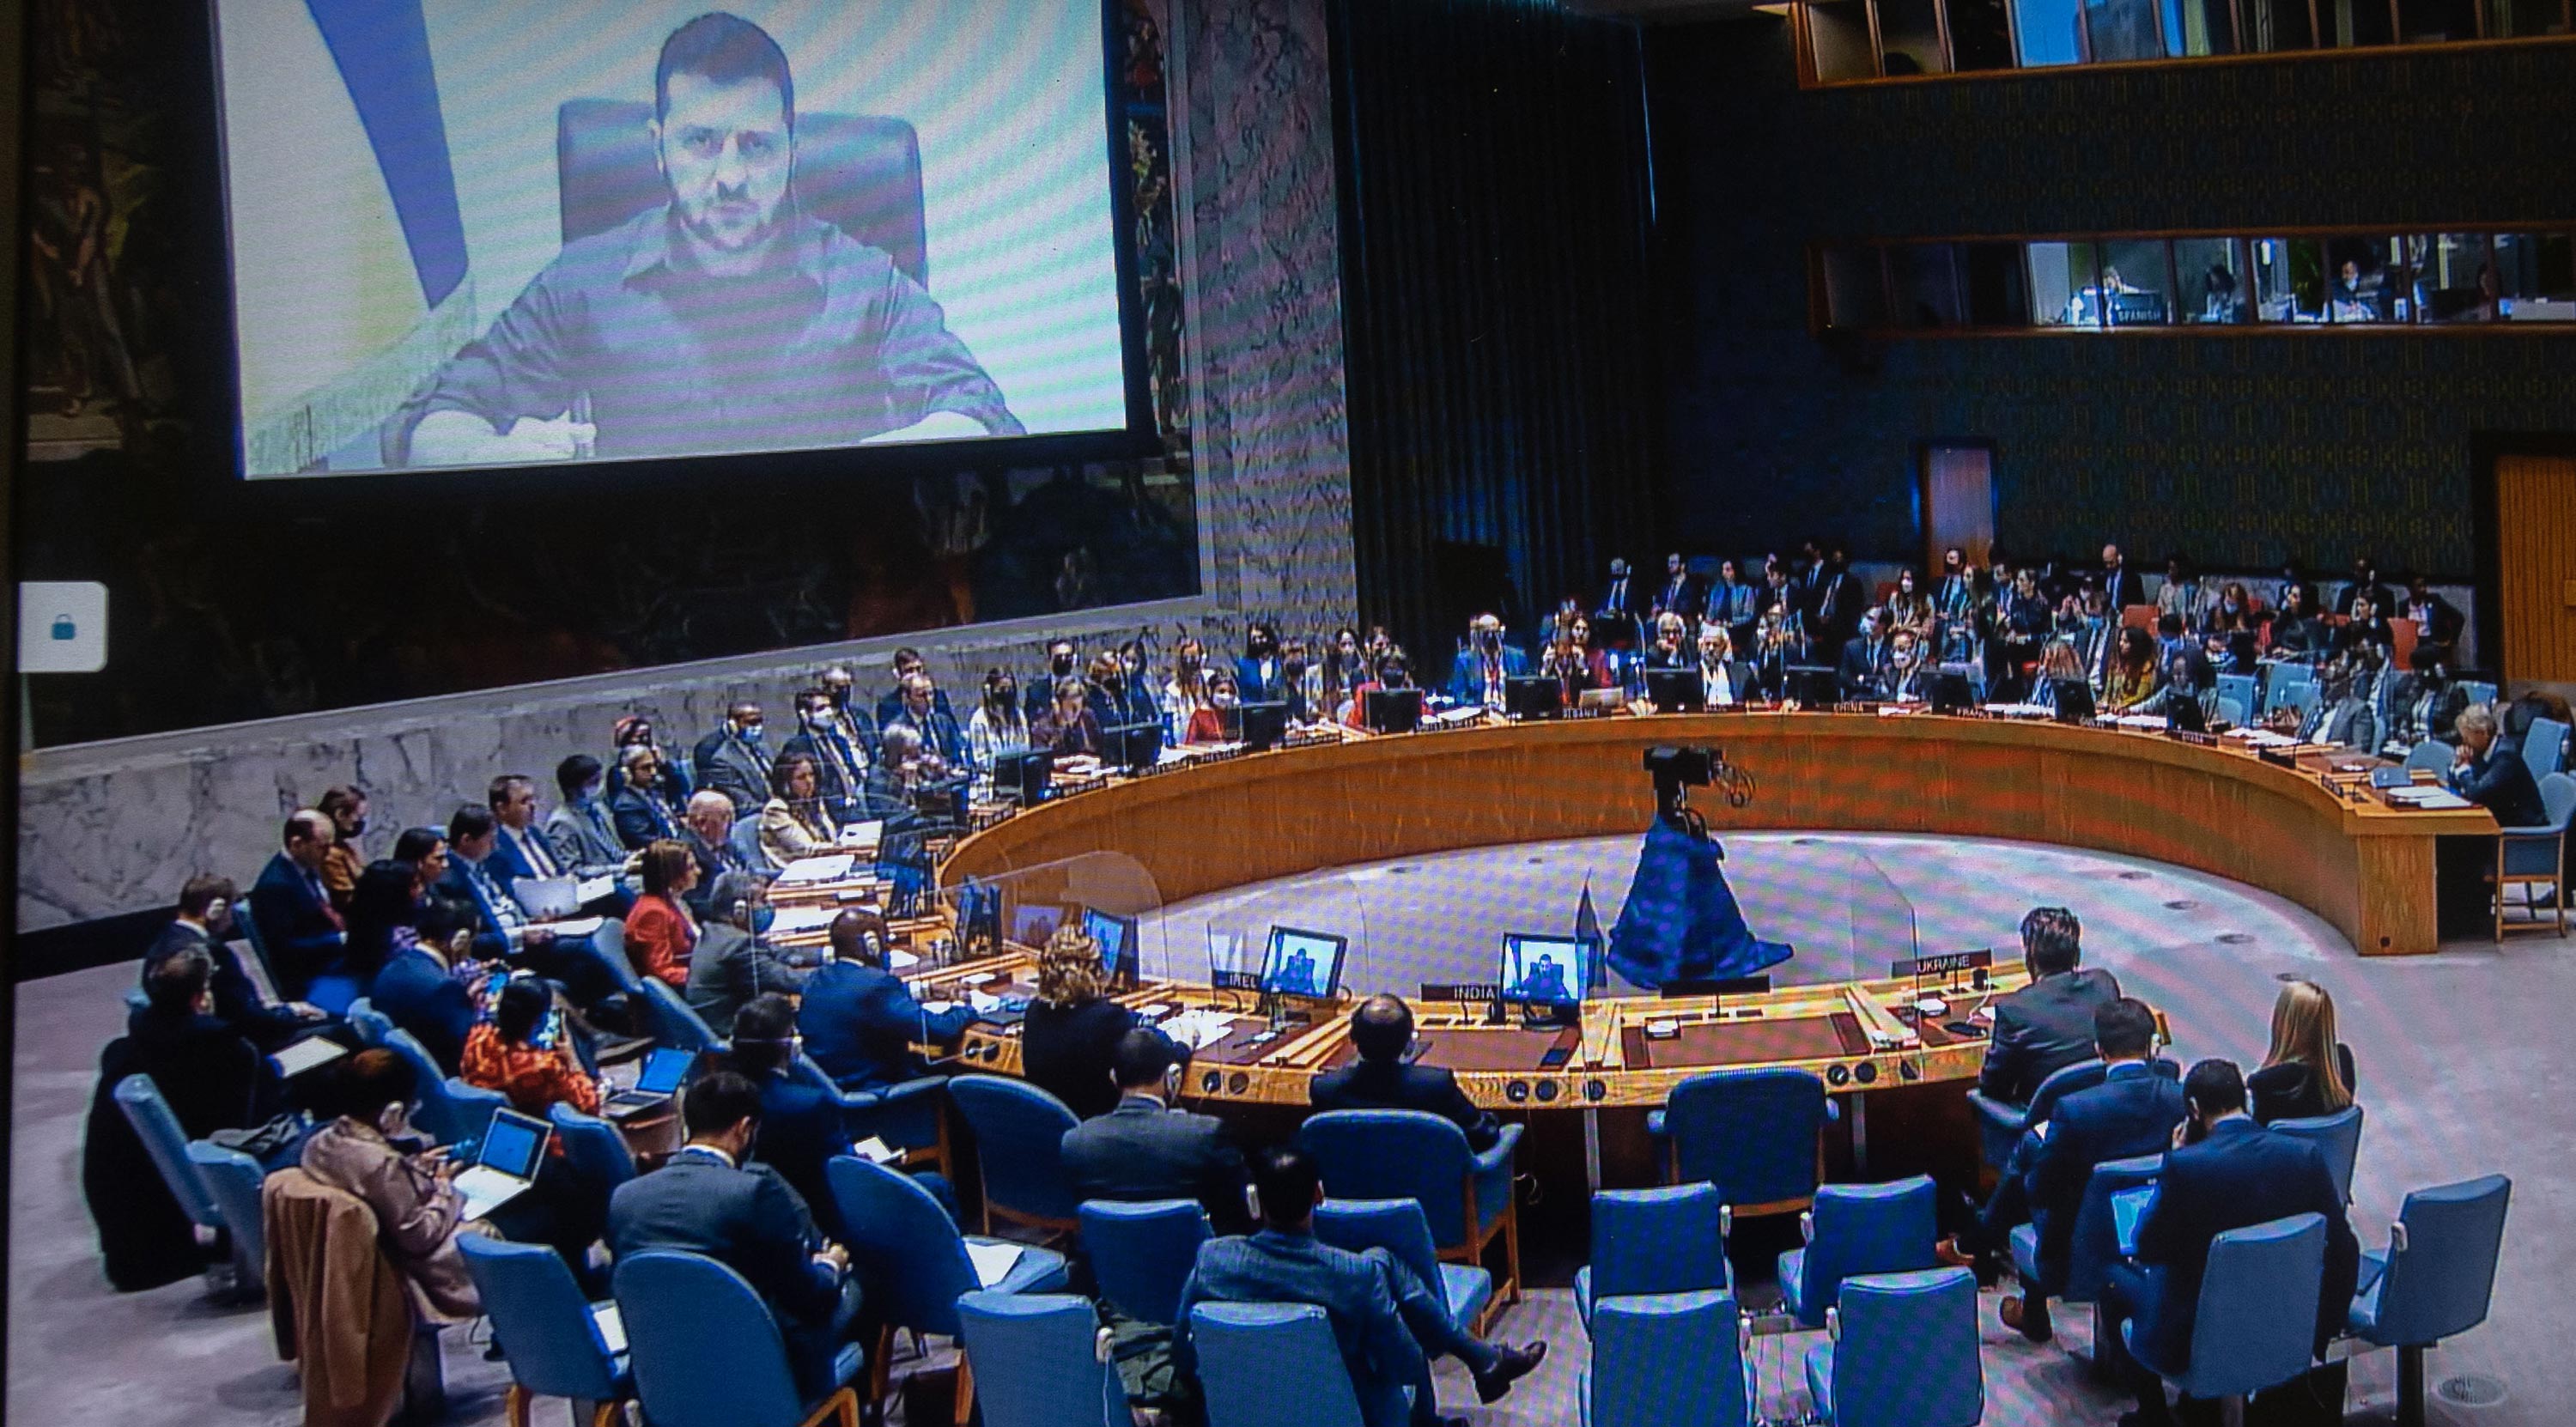 Членство оон. Собрание Совбеза ООН 2022. Совет безопасности ООН по Буче.